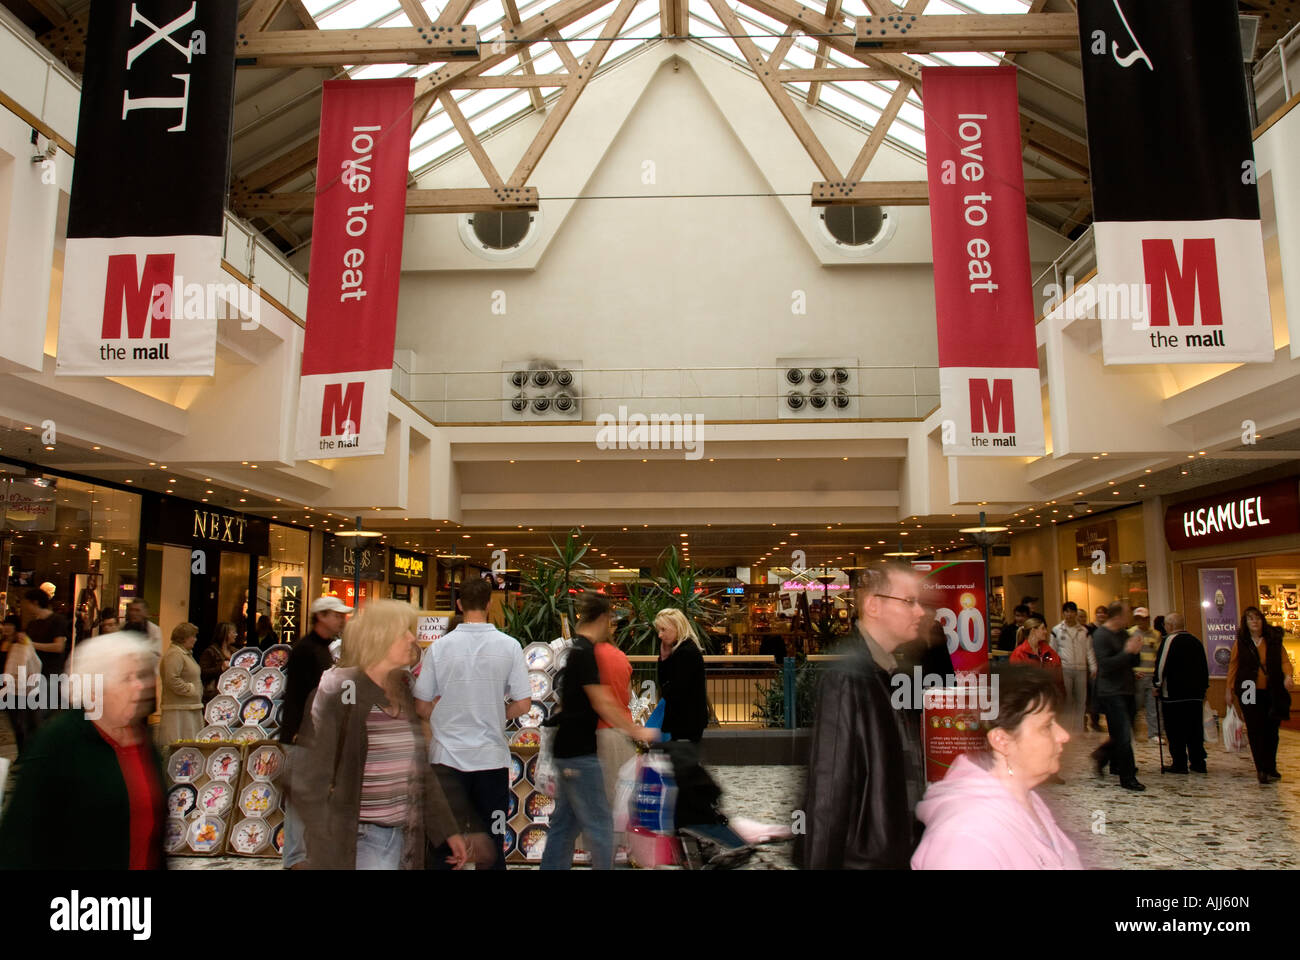 The Mall shopping Centre, Maidstone, Kent, UK Stock Photo - Alamy